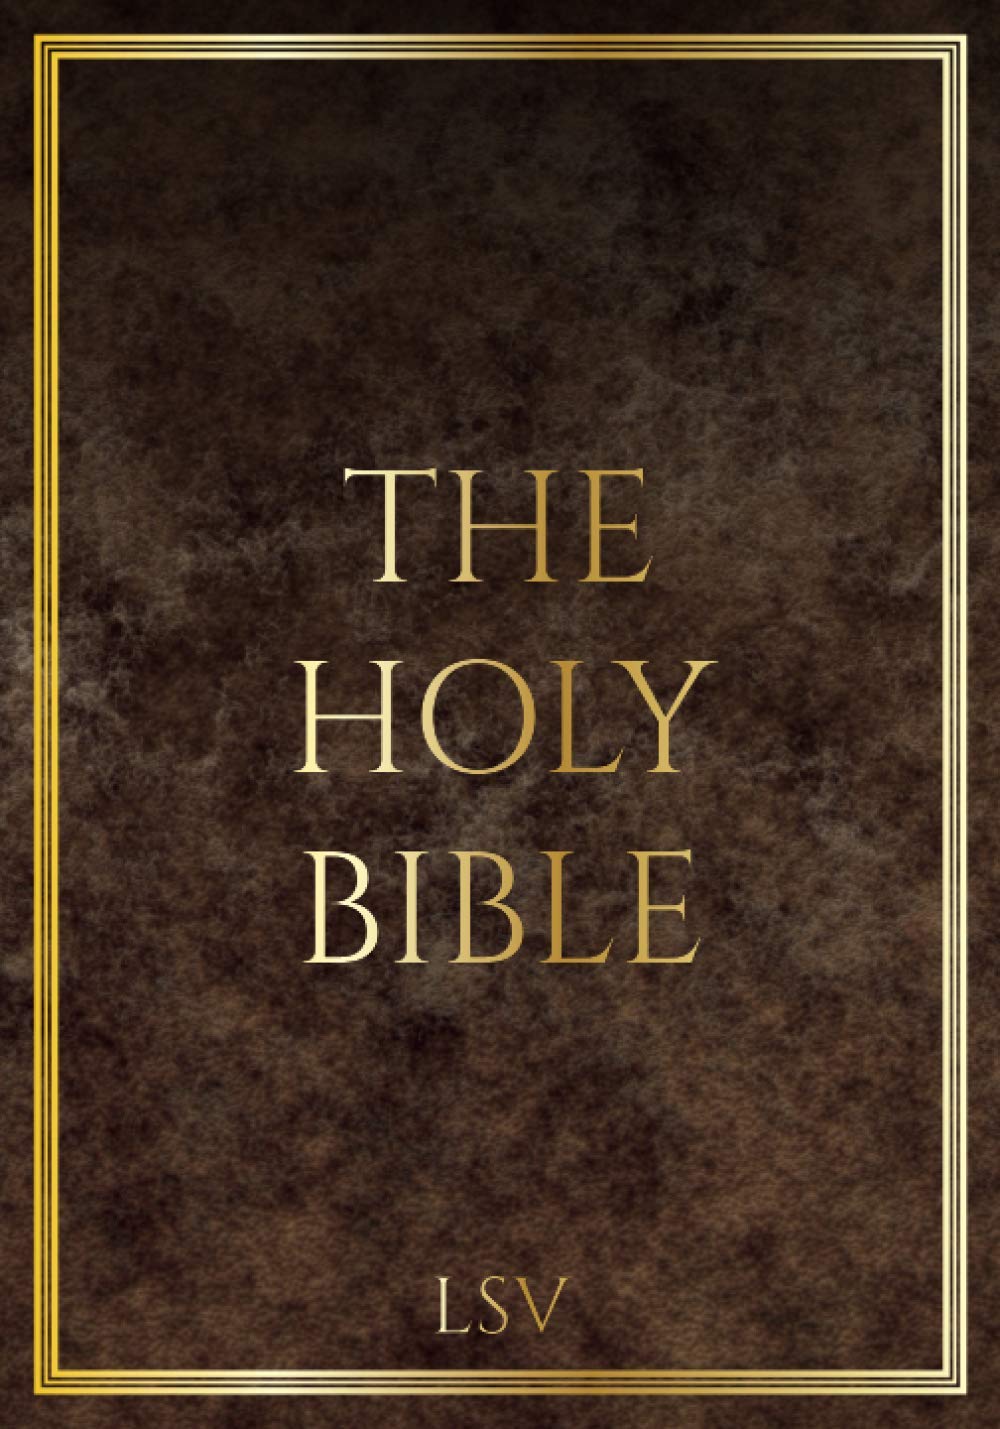 Pictures Of Holy Bible - KibrisPDR